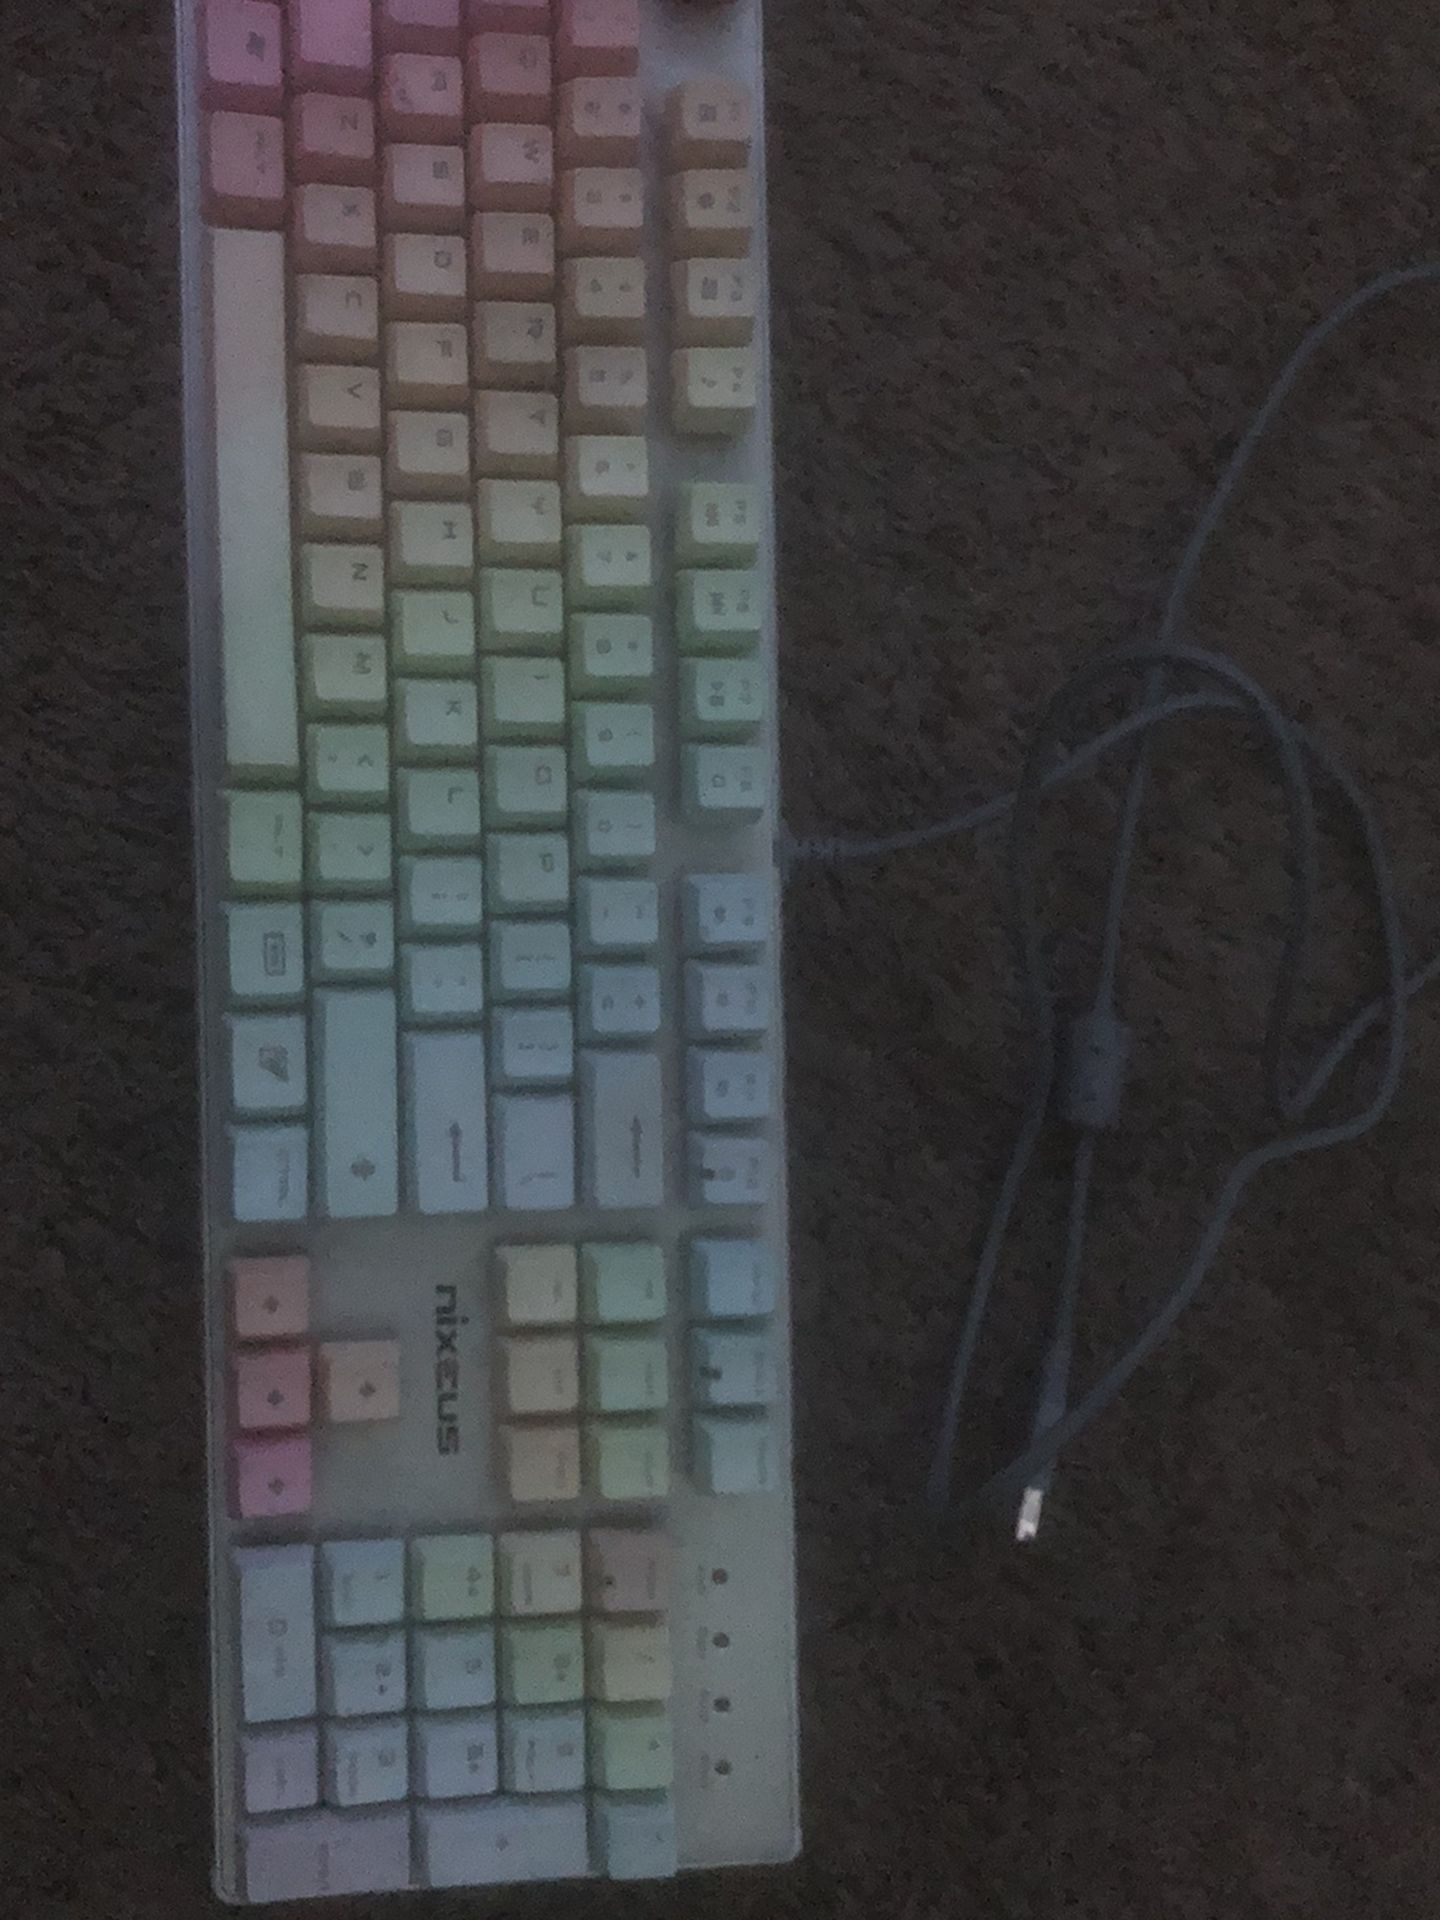 Nexius keyboard